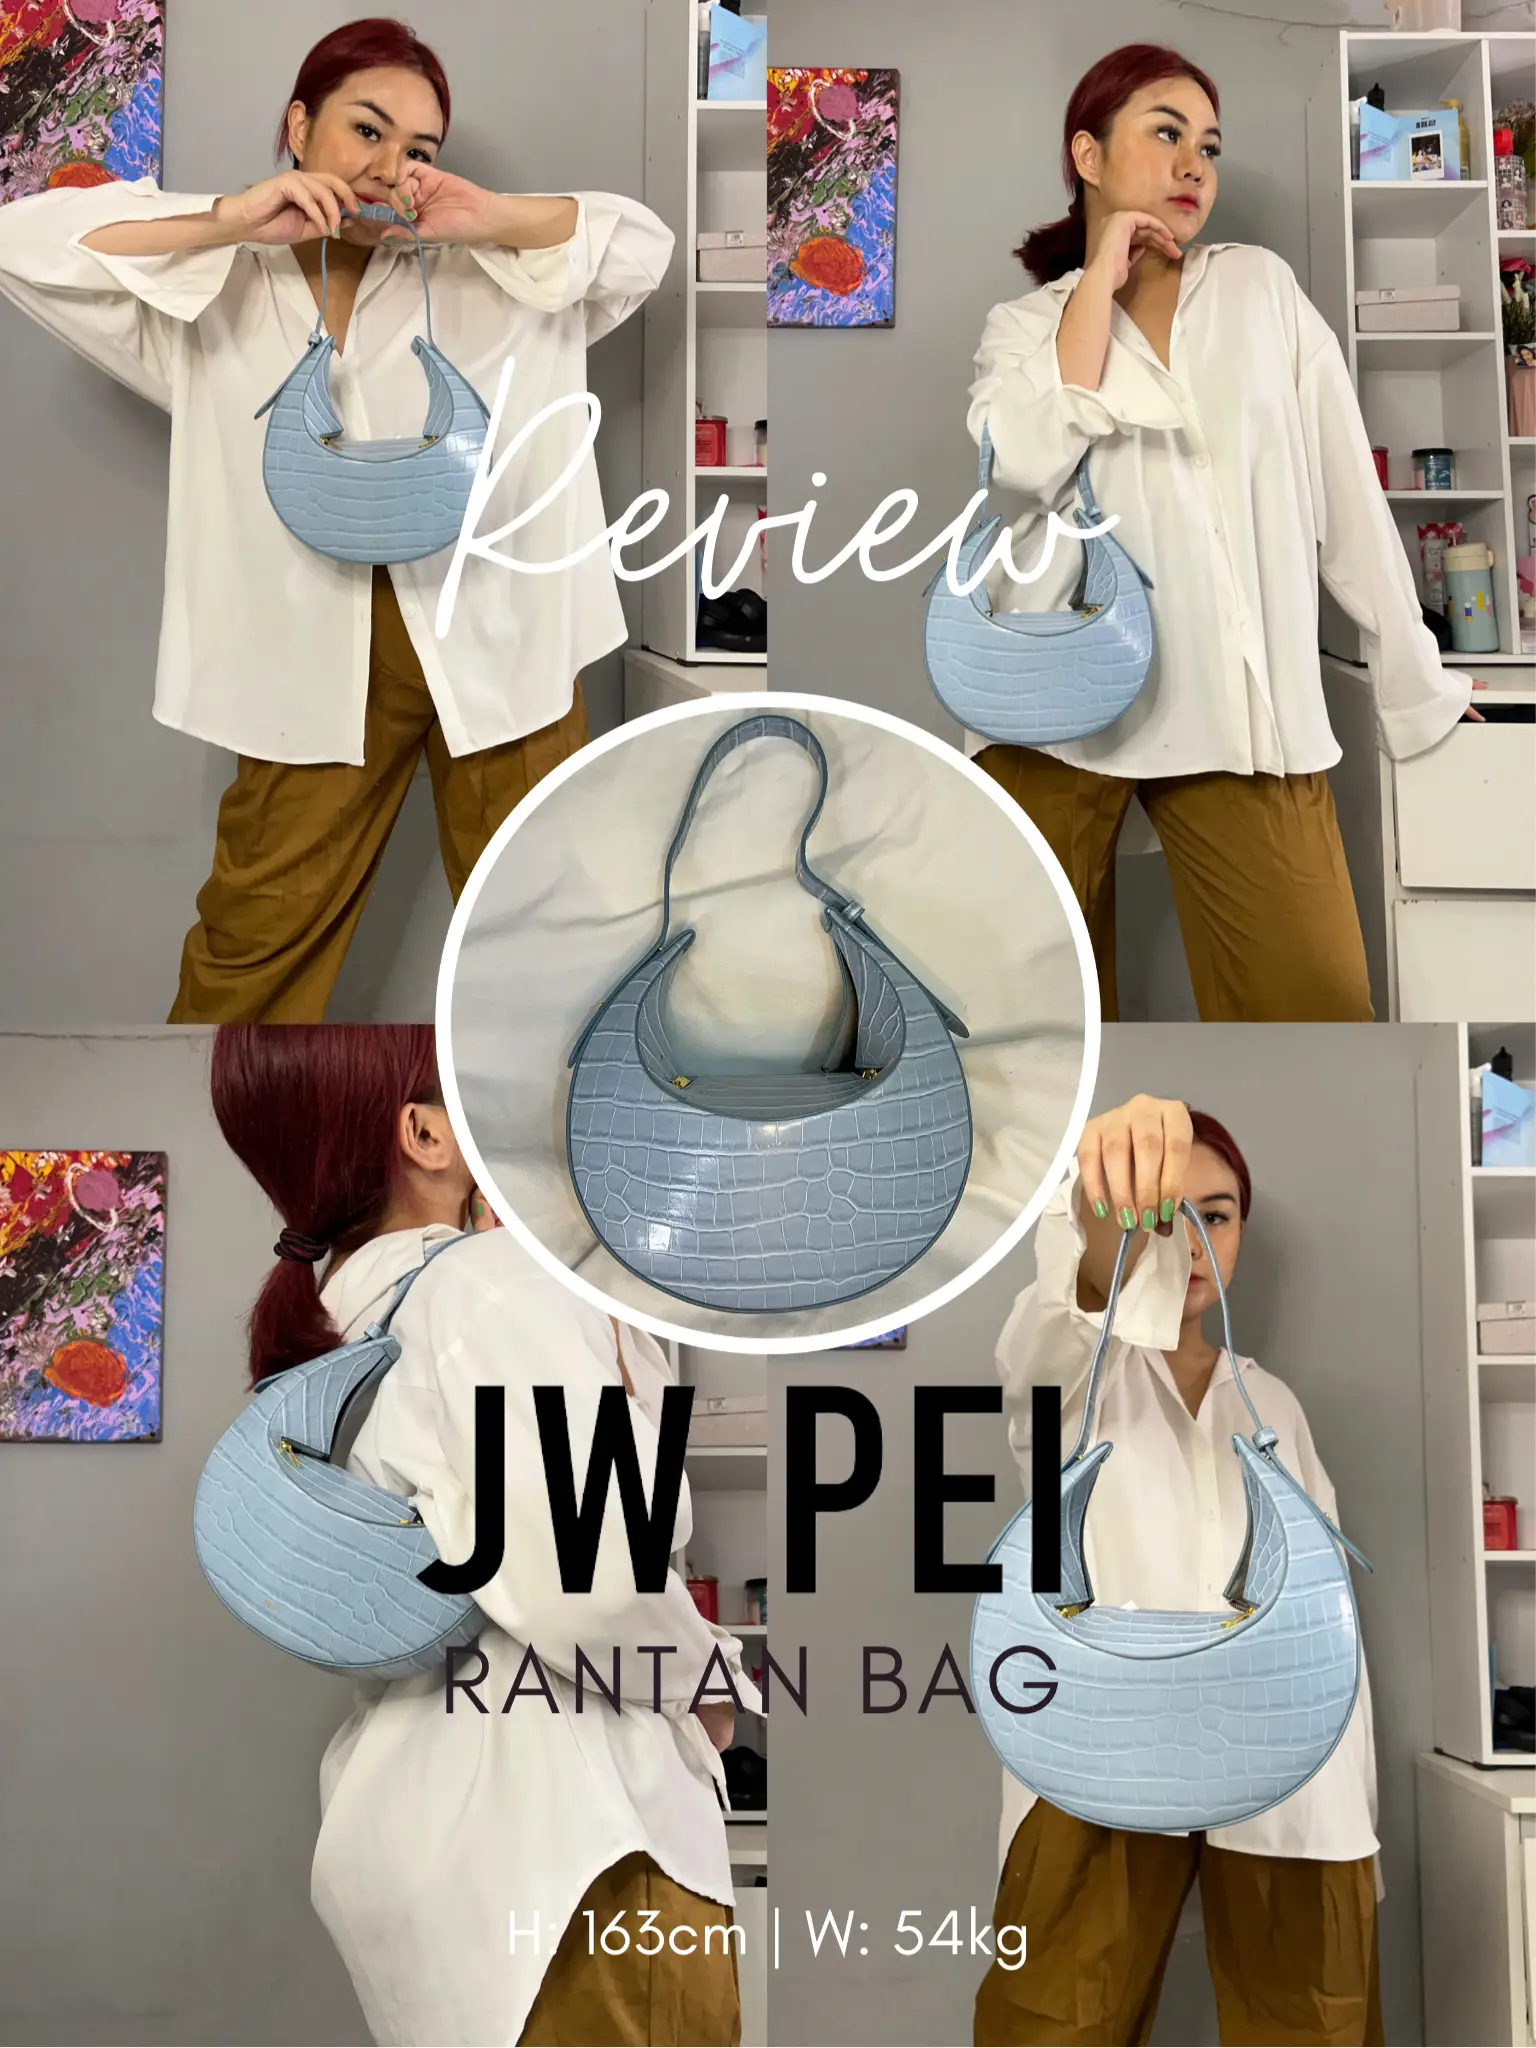 REVIEW JW PEI ✨Rantan Bag✨, Gallery posted by Karin Dennisha